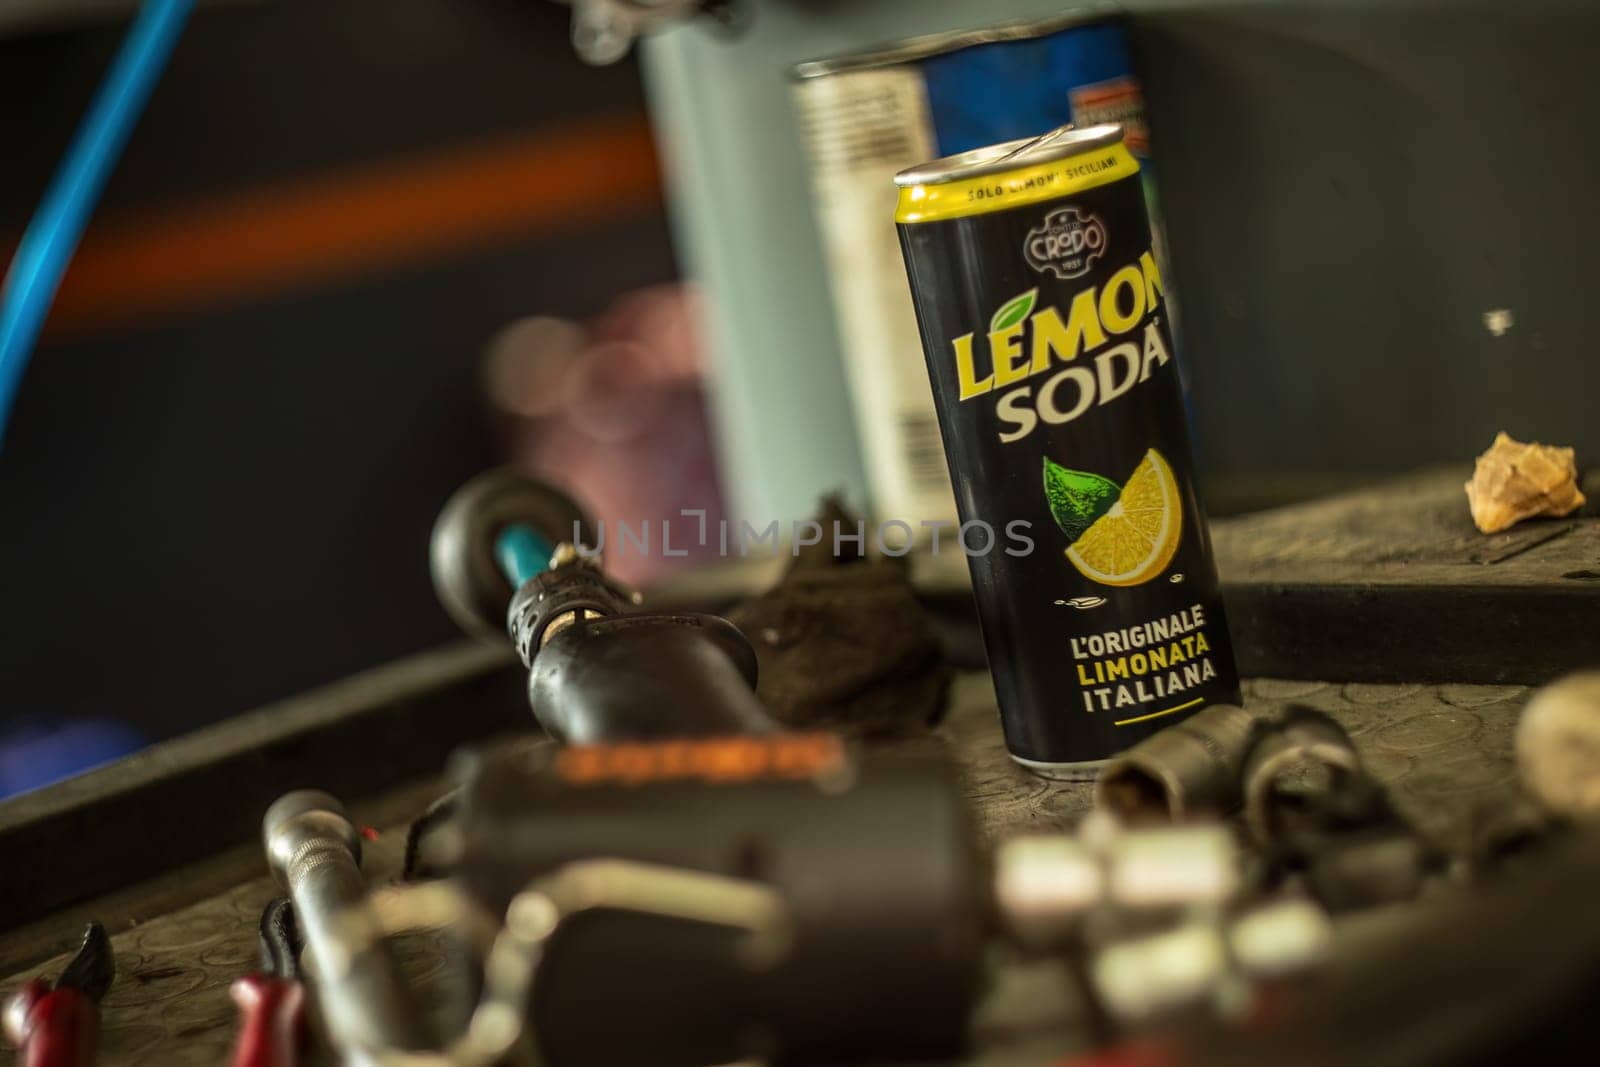 Lemon Soda Can on Workshop Bench by pippocarlot